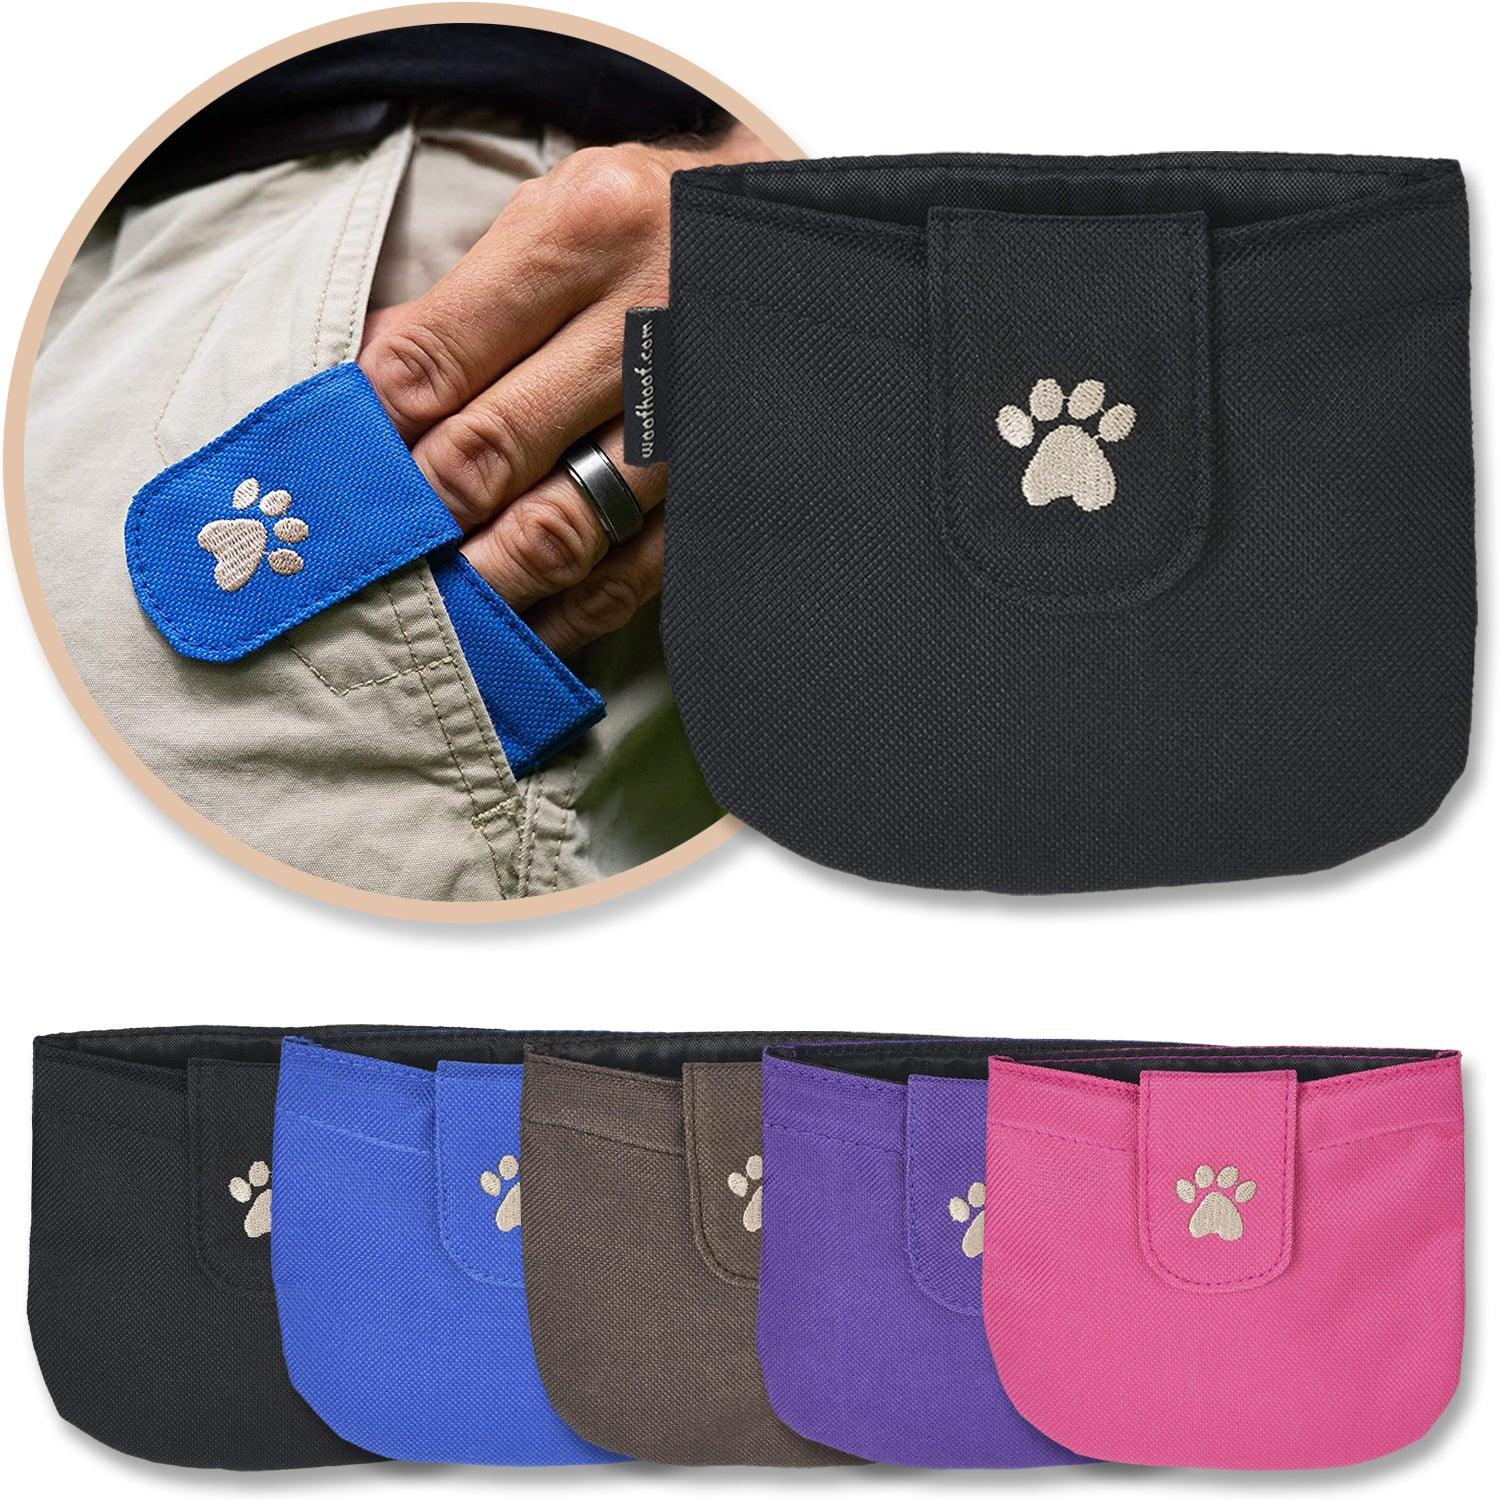 dog-treat-pocket-pouch